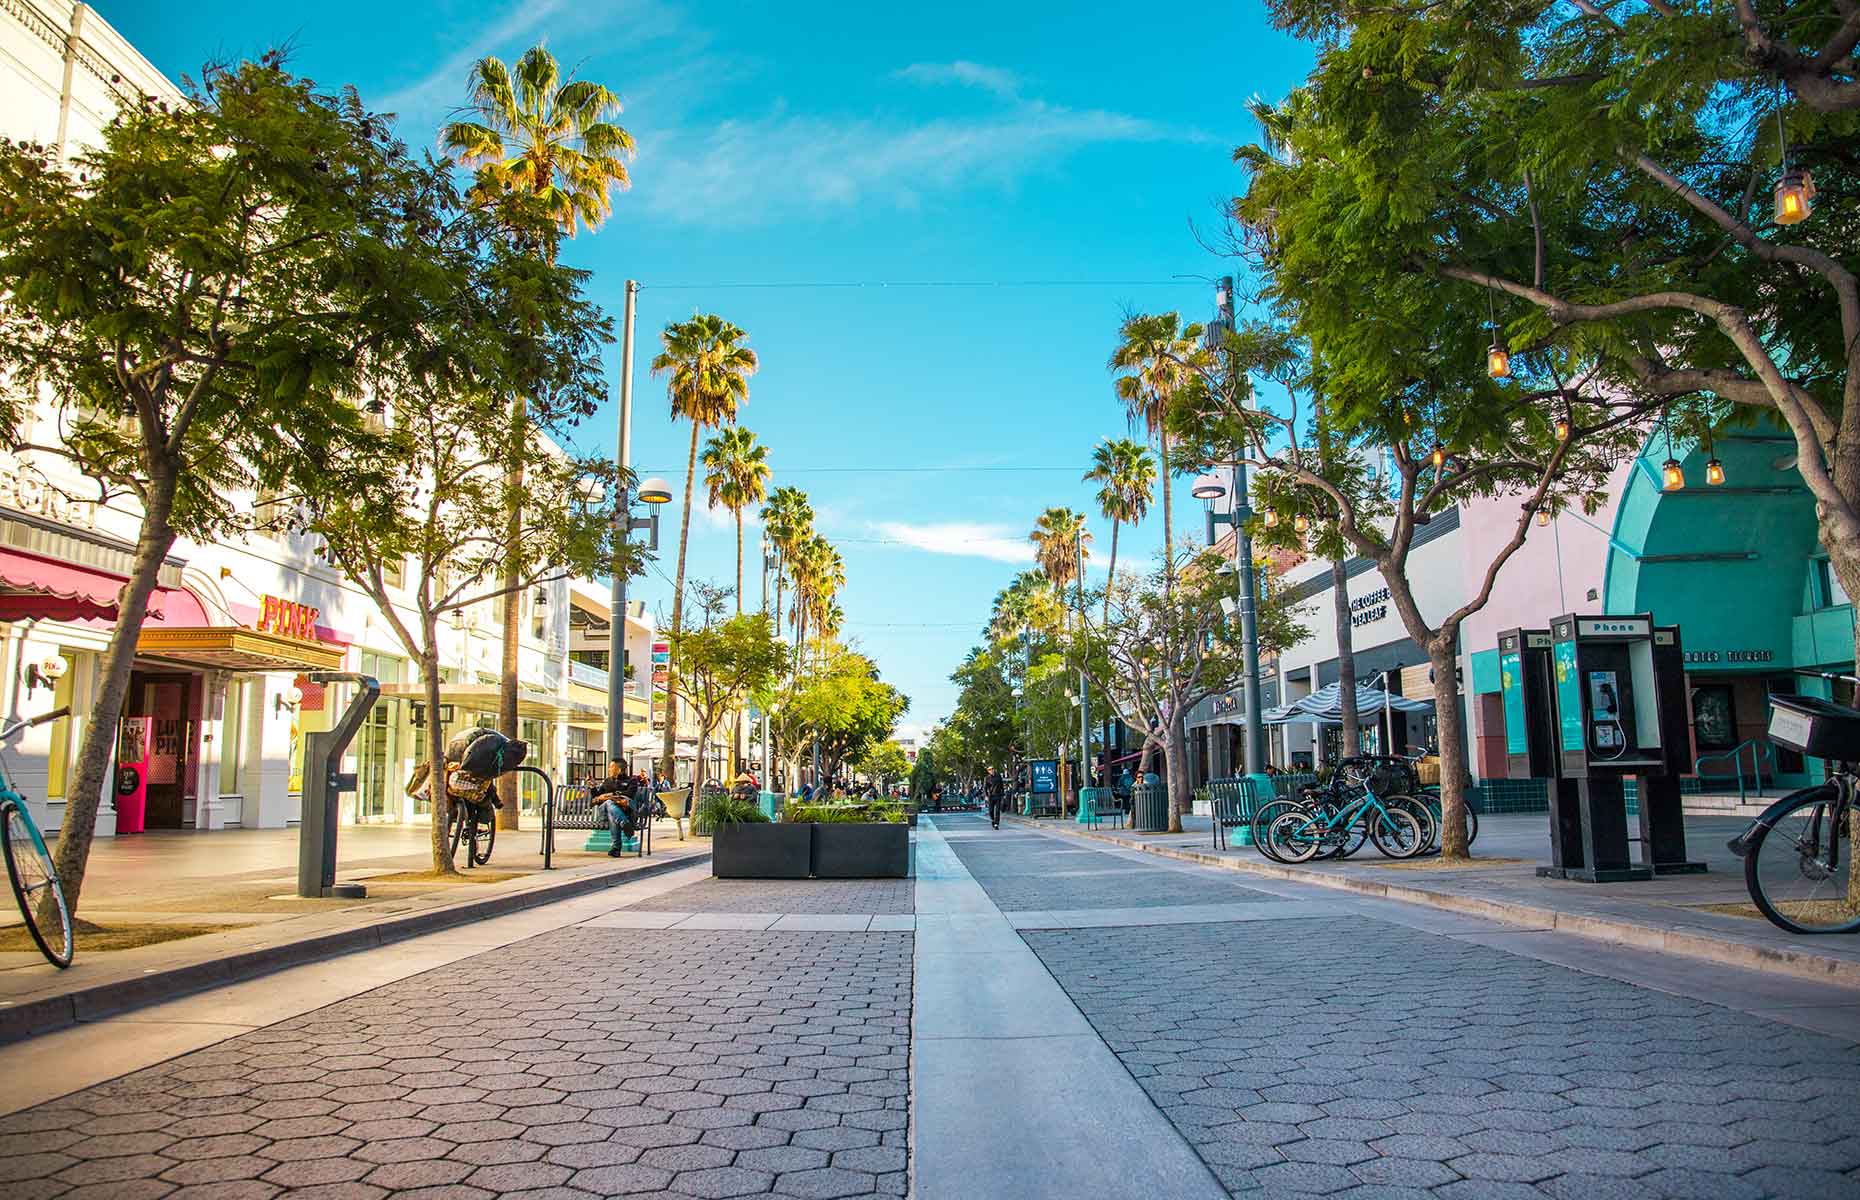 Third Street Promenade, Santa Monica (Image: LMWH/Shutterstock)